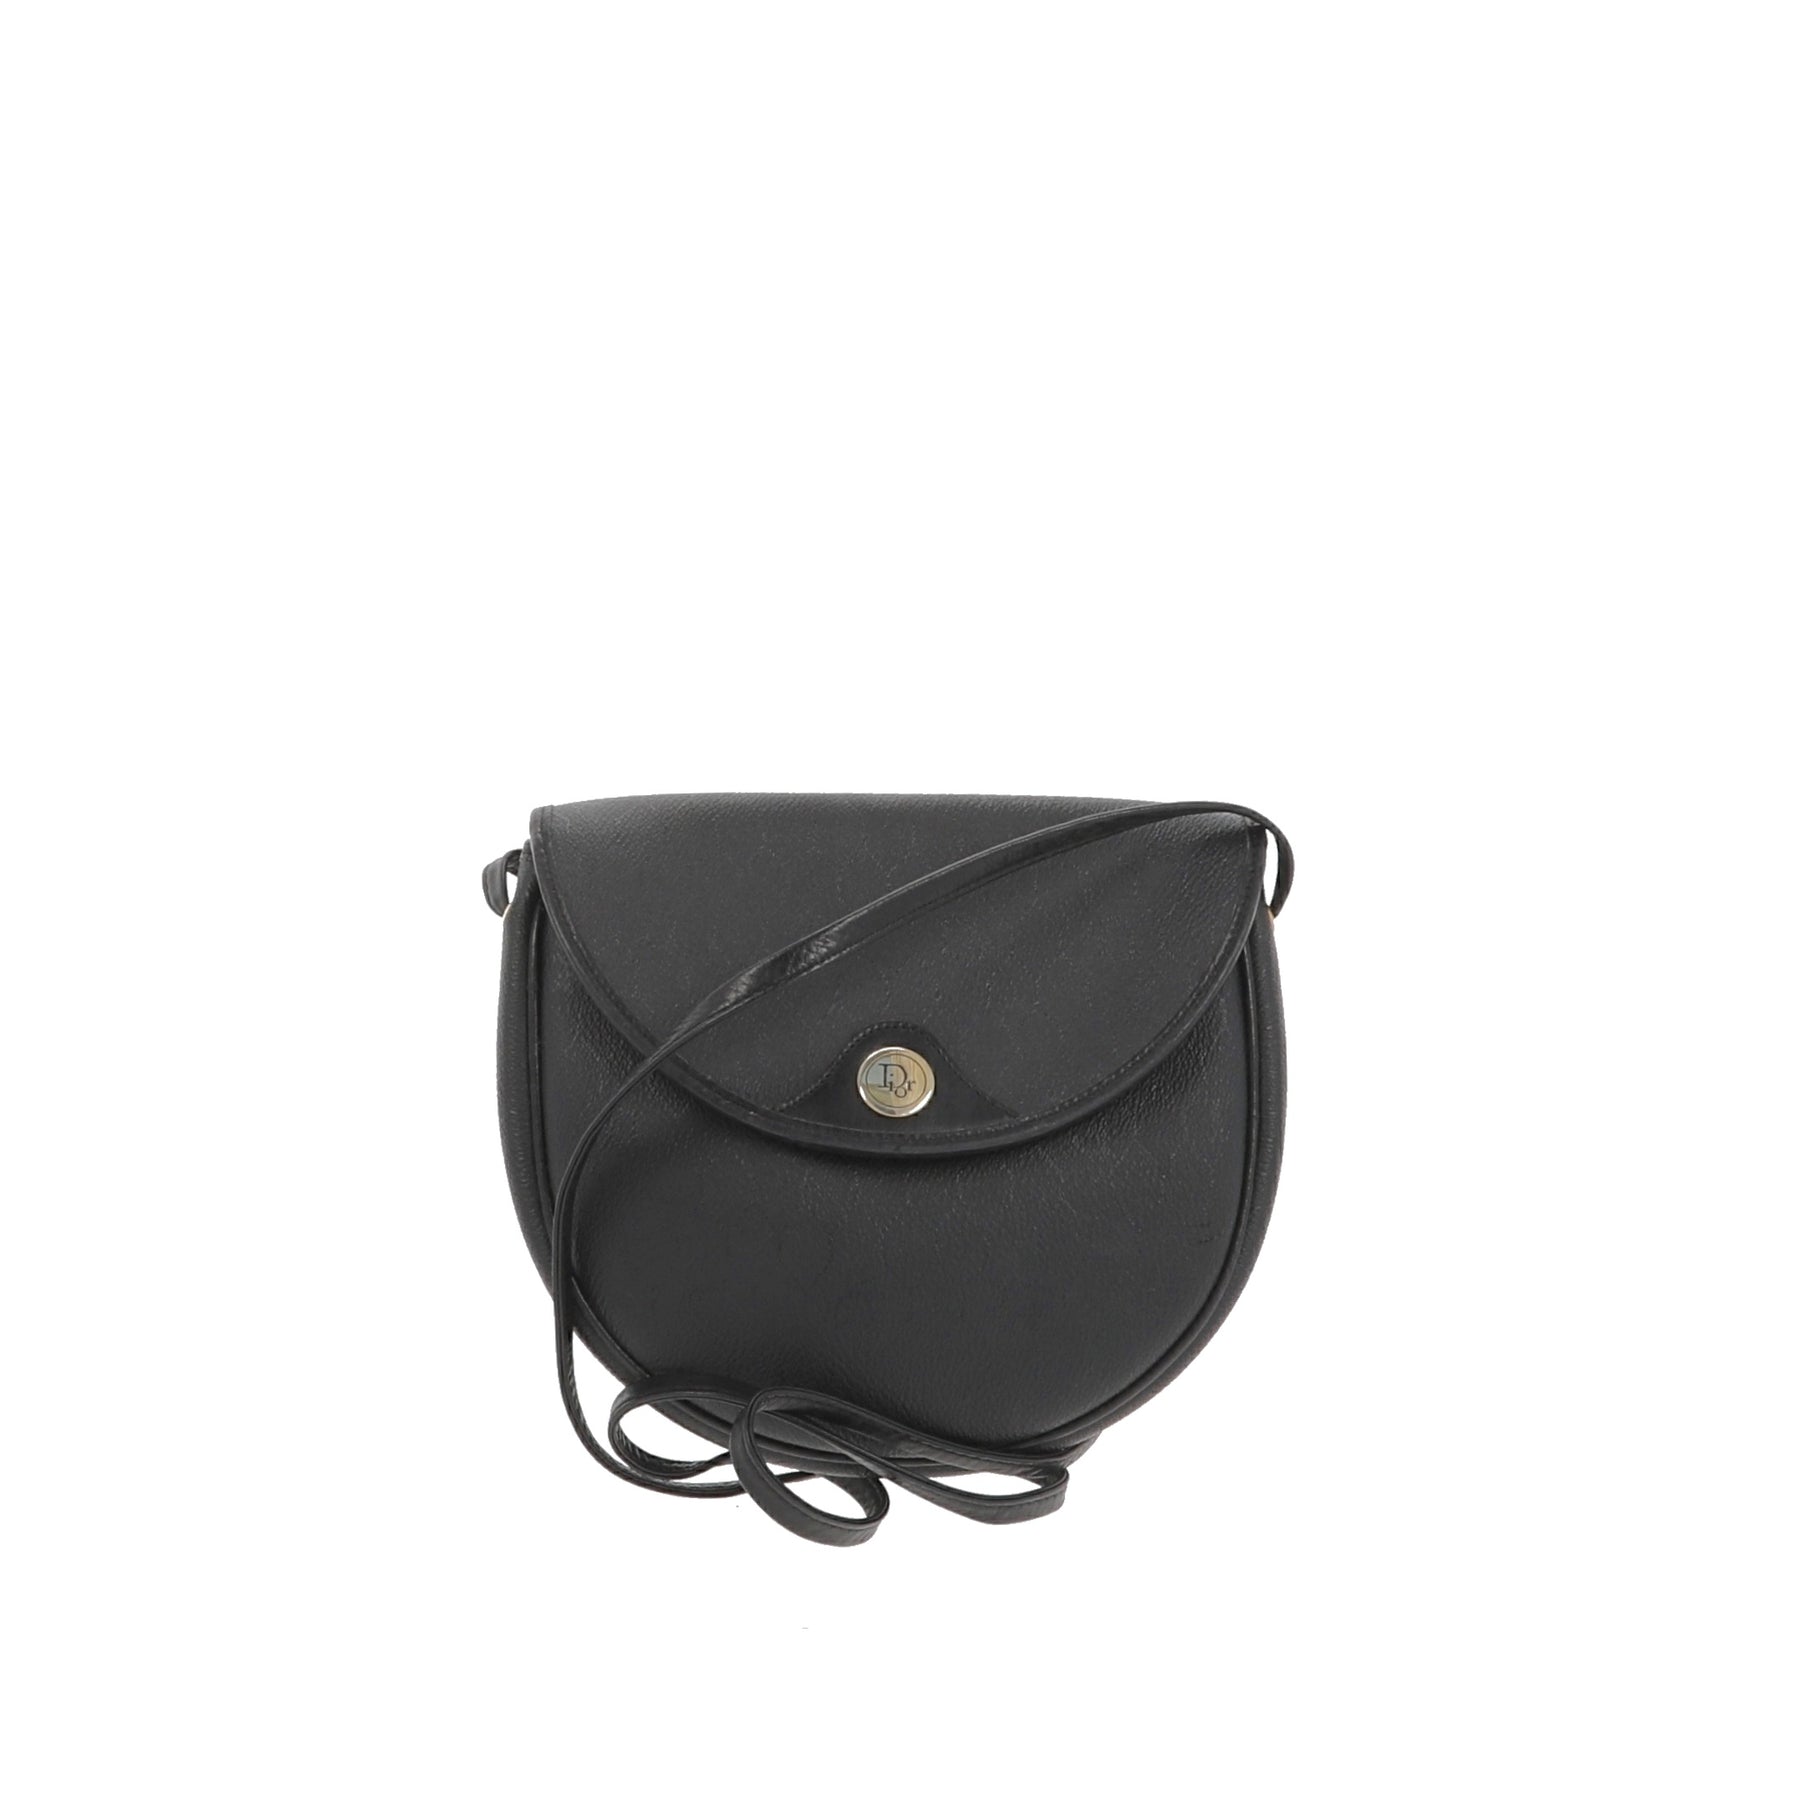 Auth.Vtg Christian Dior black canvas leather speedy satchel handbag tote  France 